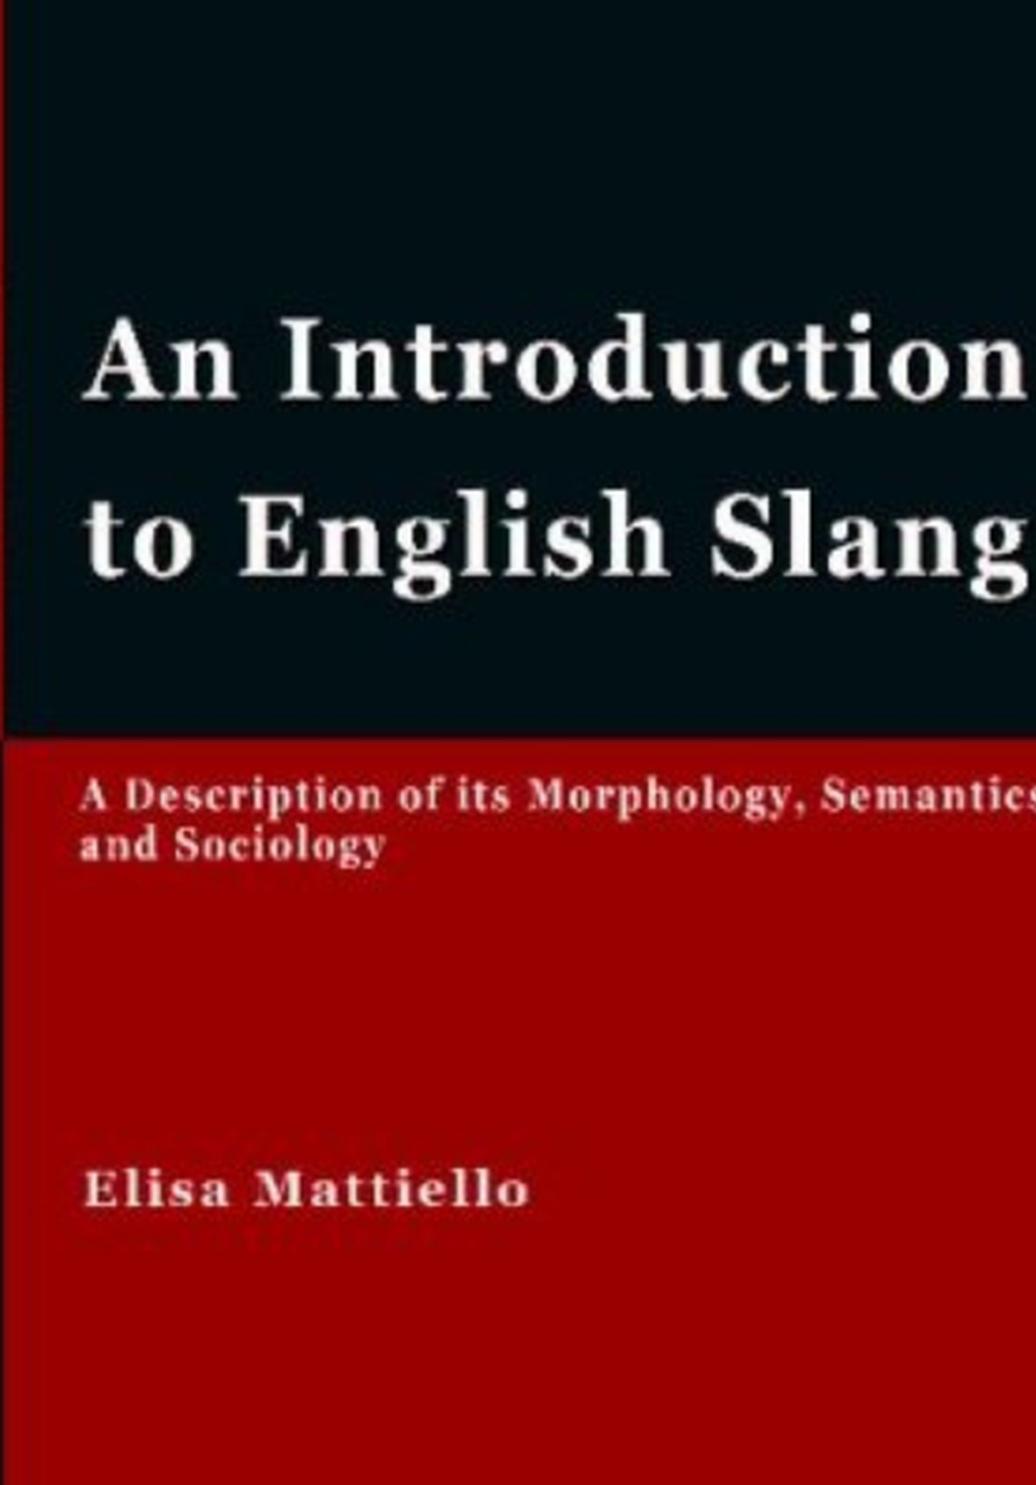 An Introduction to English Slang: A Description of Its Morphology, Semantics and Sociology